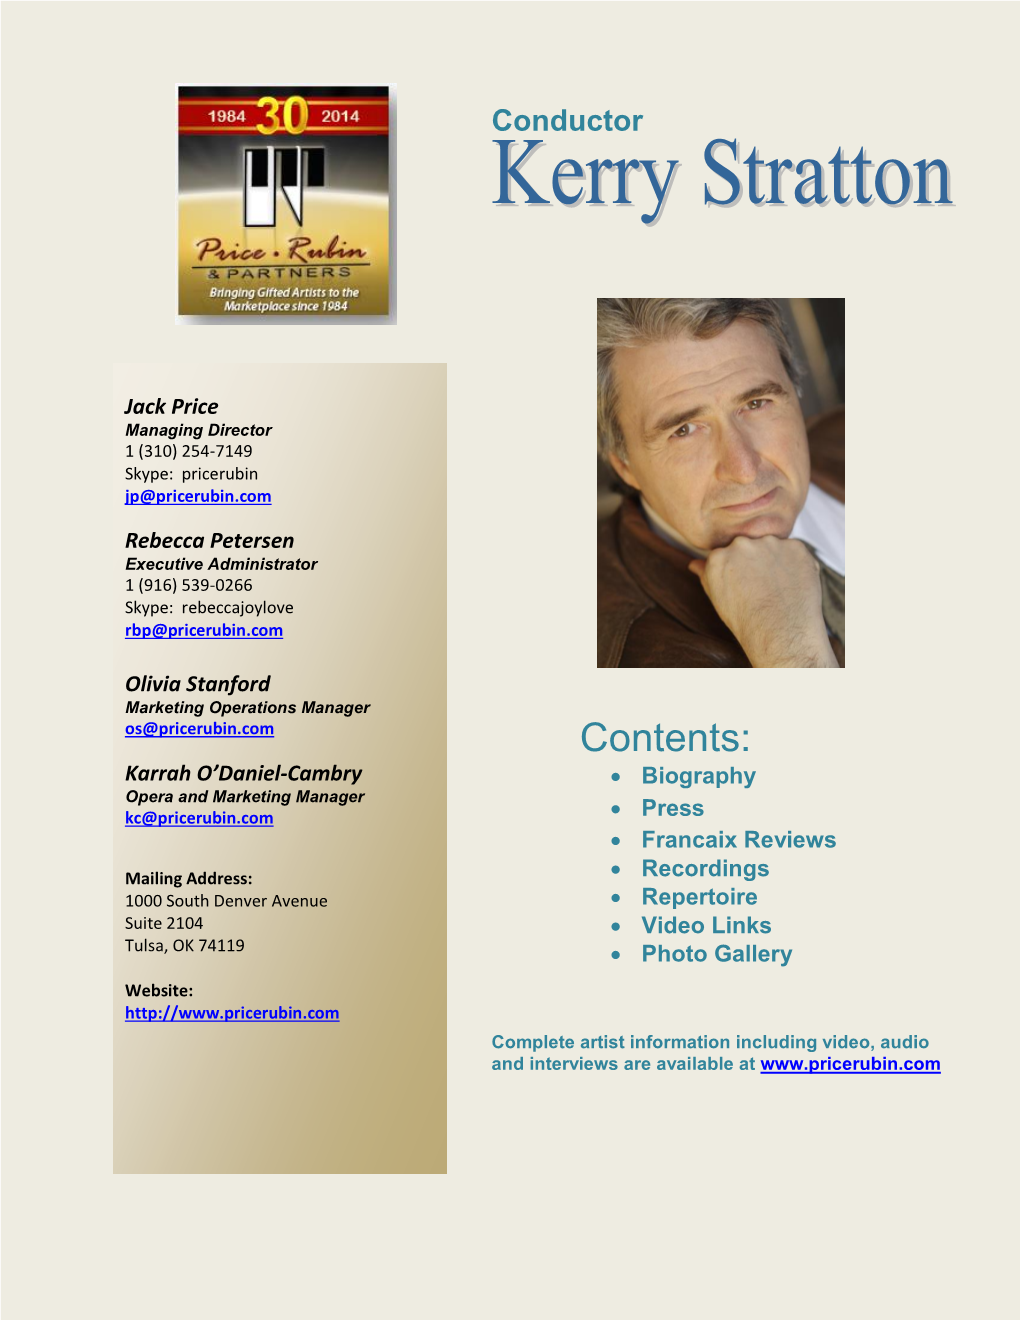 Kerry Stratton – Biography